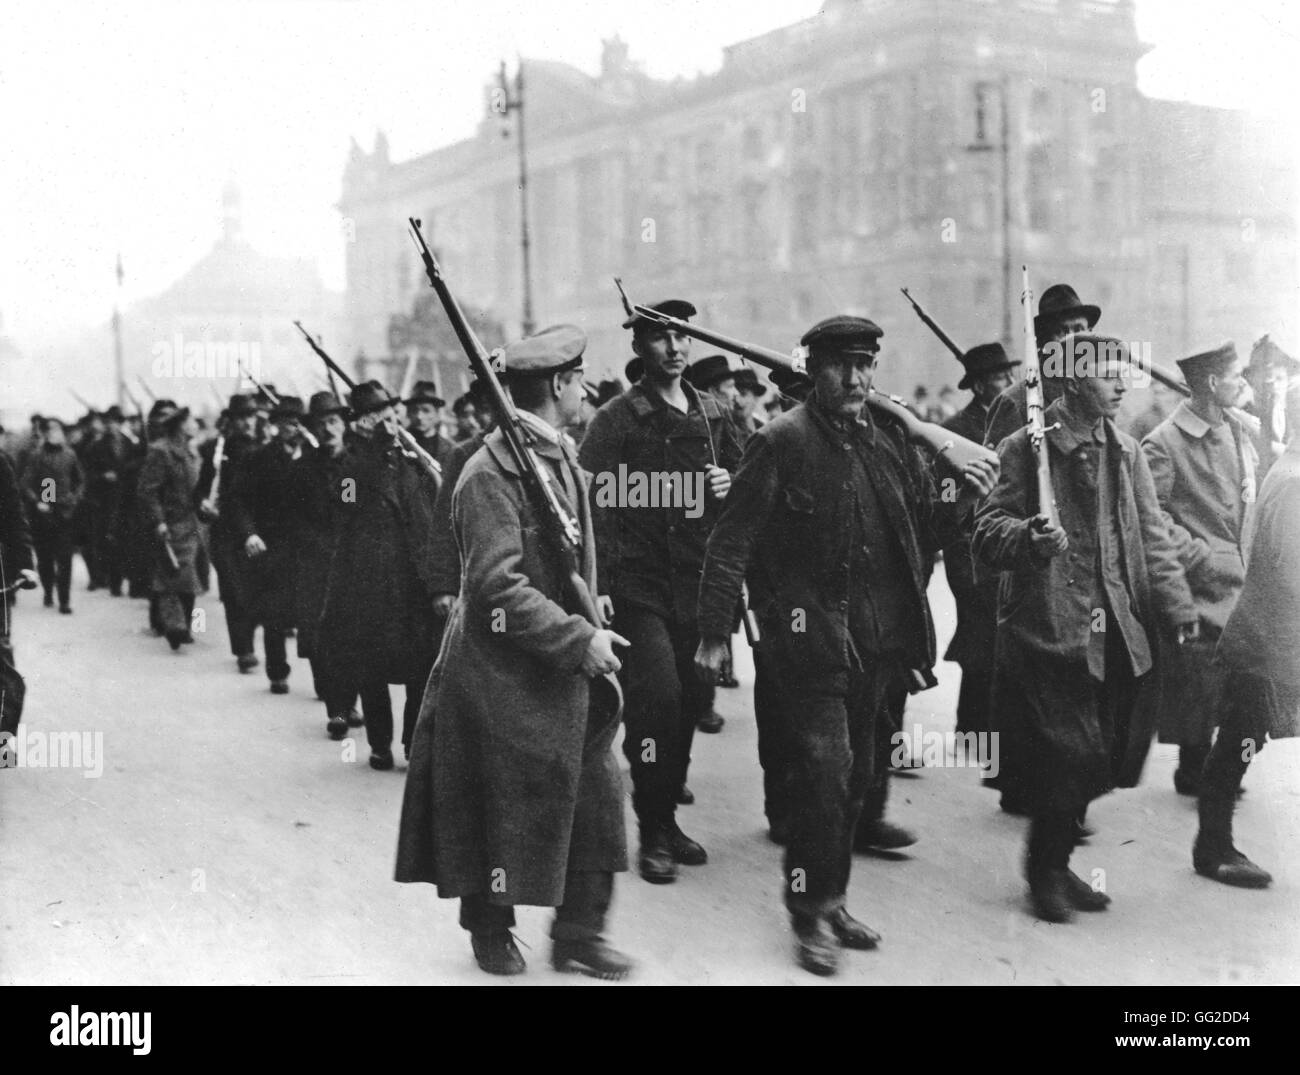 Spartacist demonstration November 1918 Germany - Spartacist revolution Stock Photo